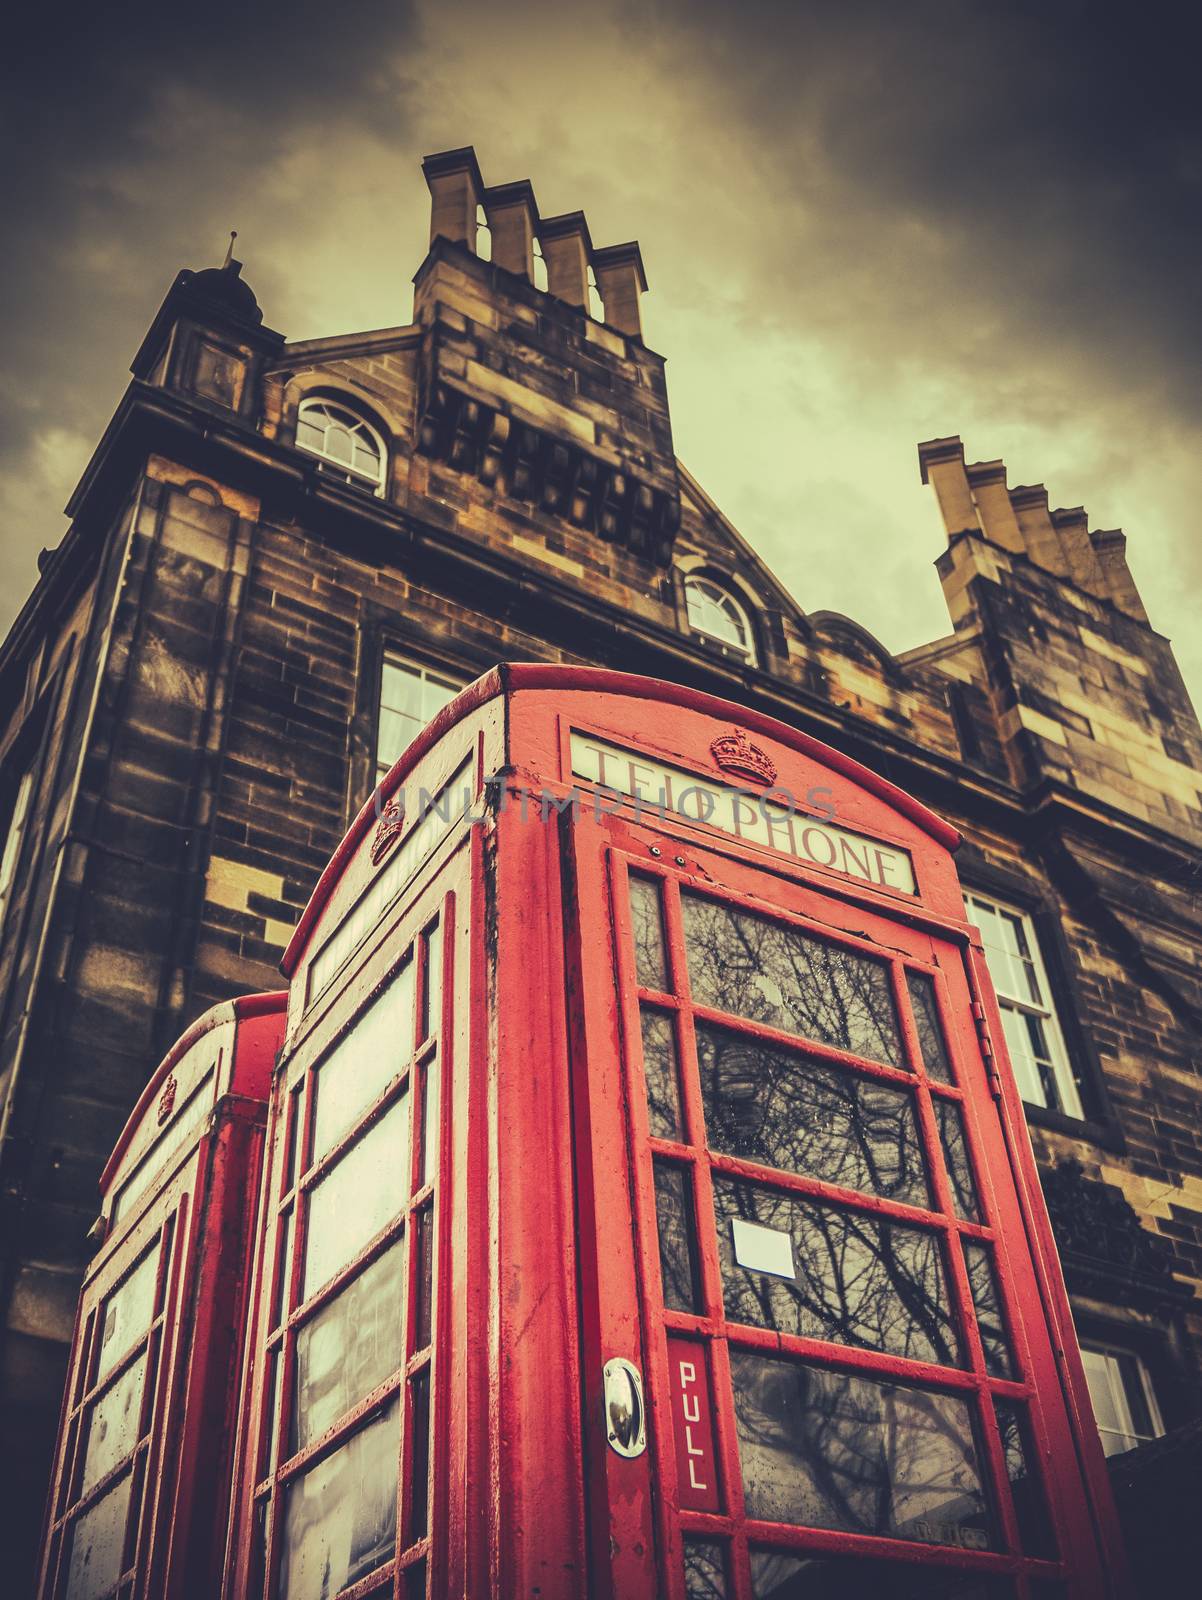 A Vintage British Phonebox In A British City (Edinburgh) Against Stormy Sky